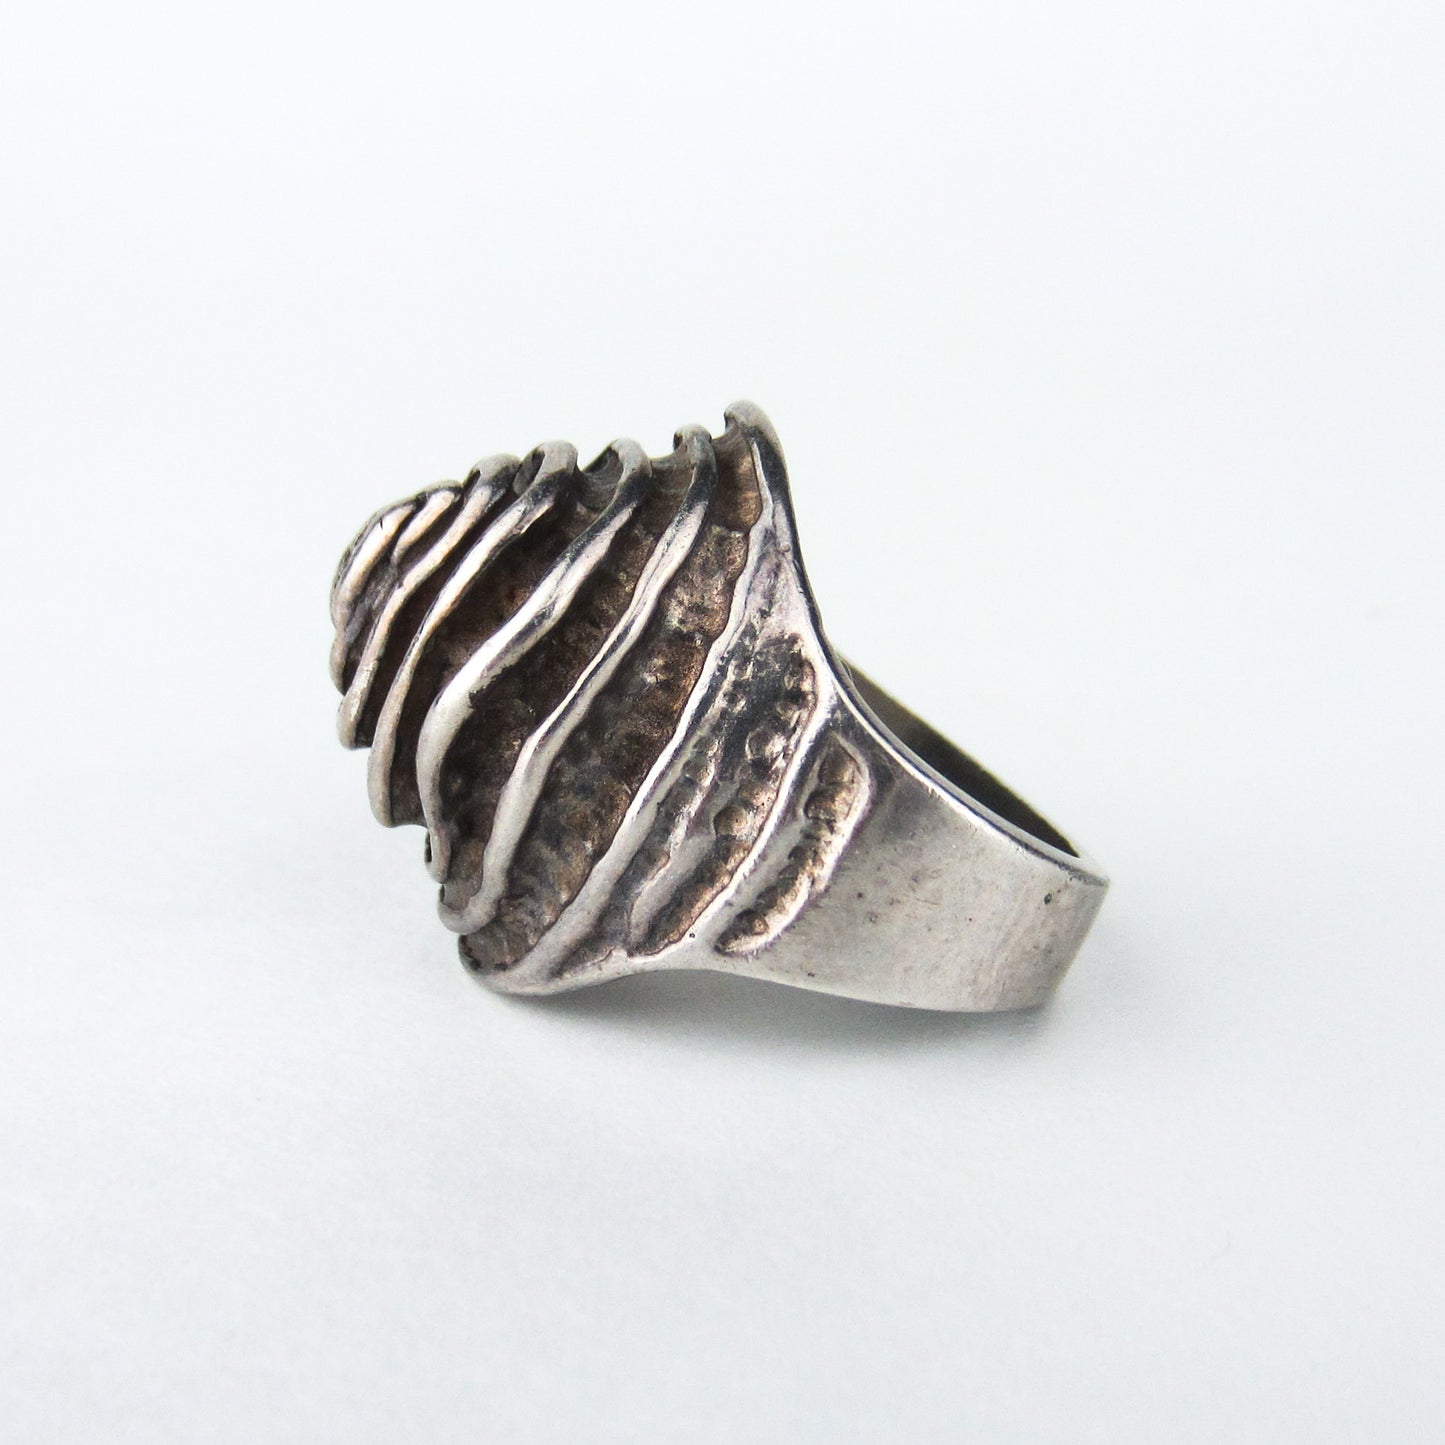 SOLD--Modernist Ridged Cone Ring Sterling Silver, Pauline Rader c. 1960